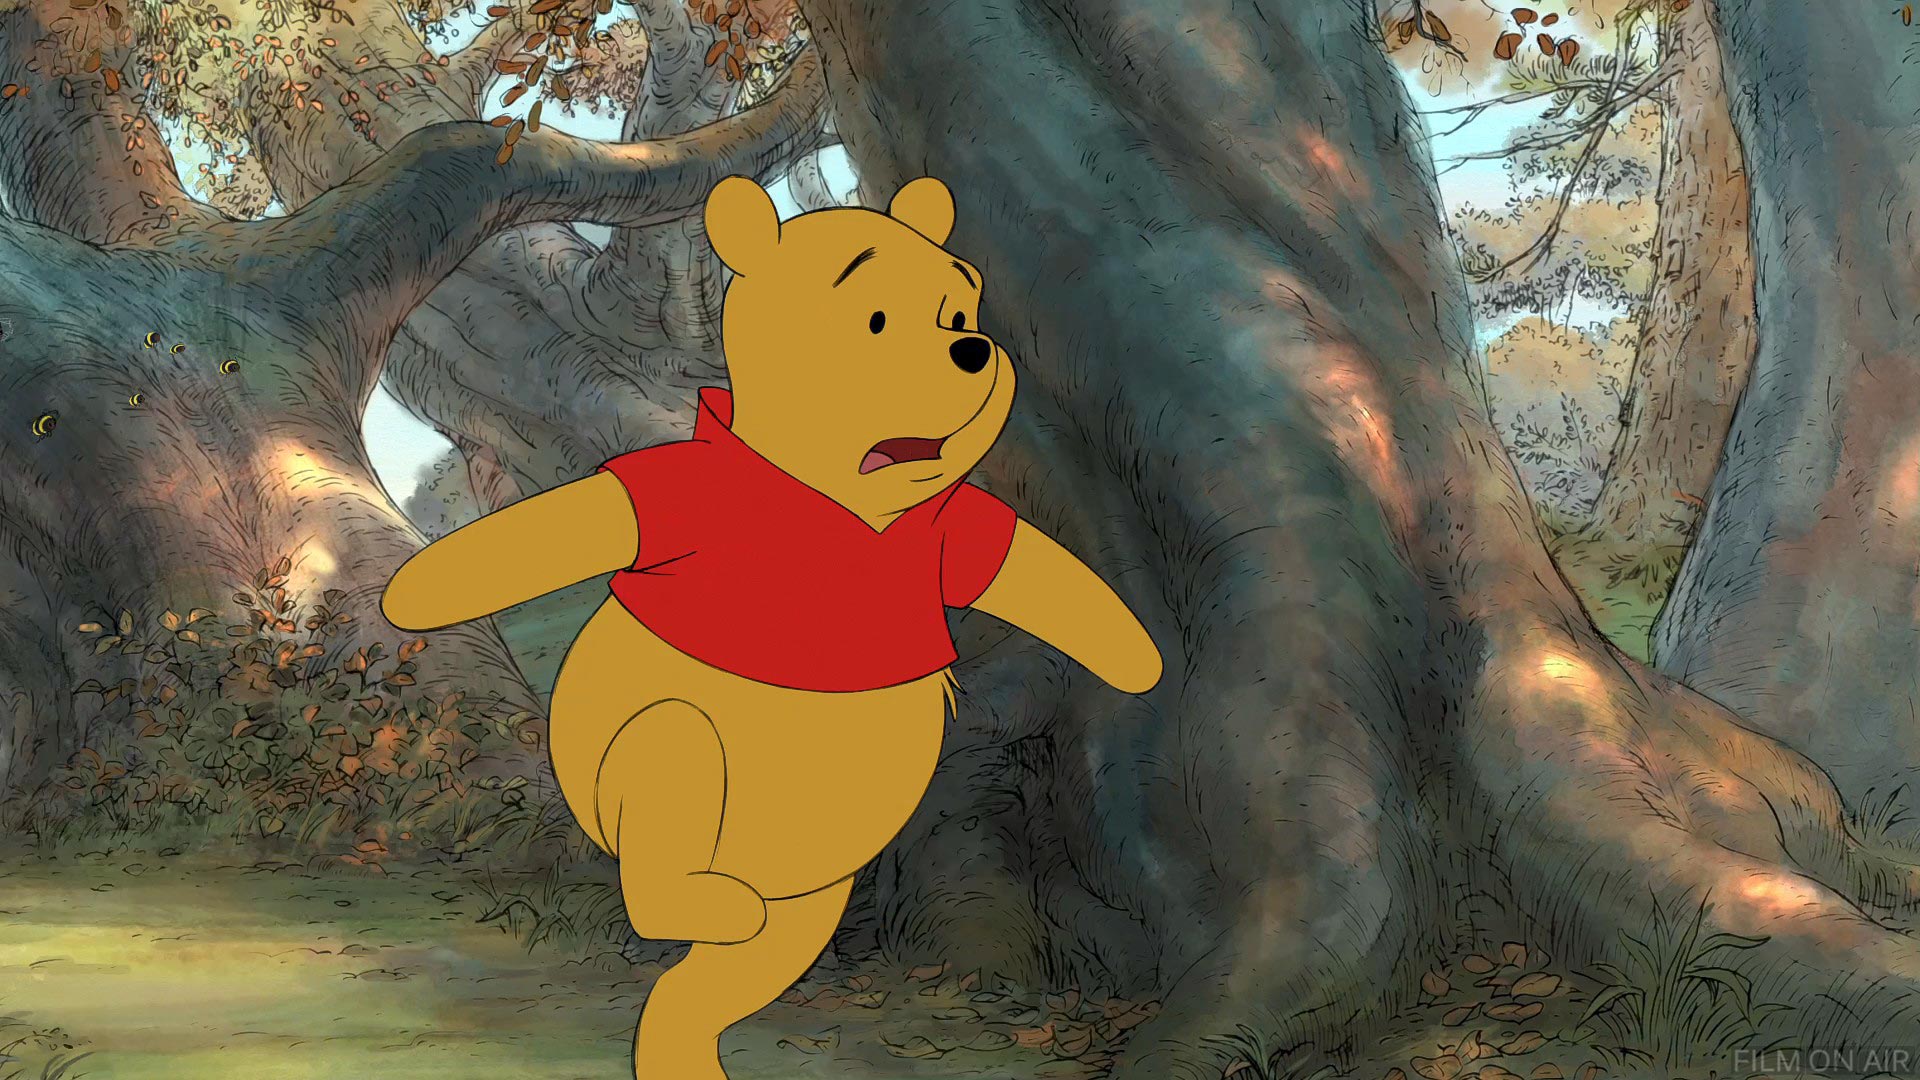 Winnie the pooh adventures. Винни-пух. Медведь Винни пух американский.